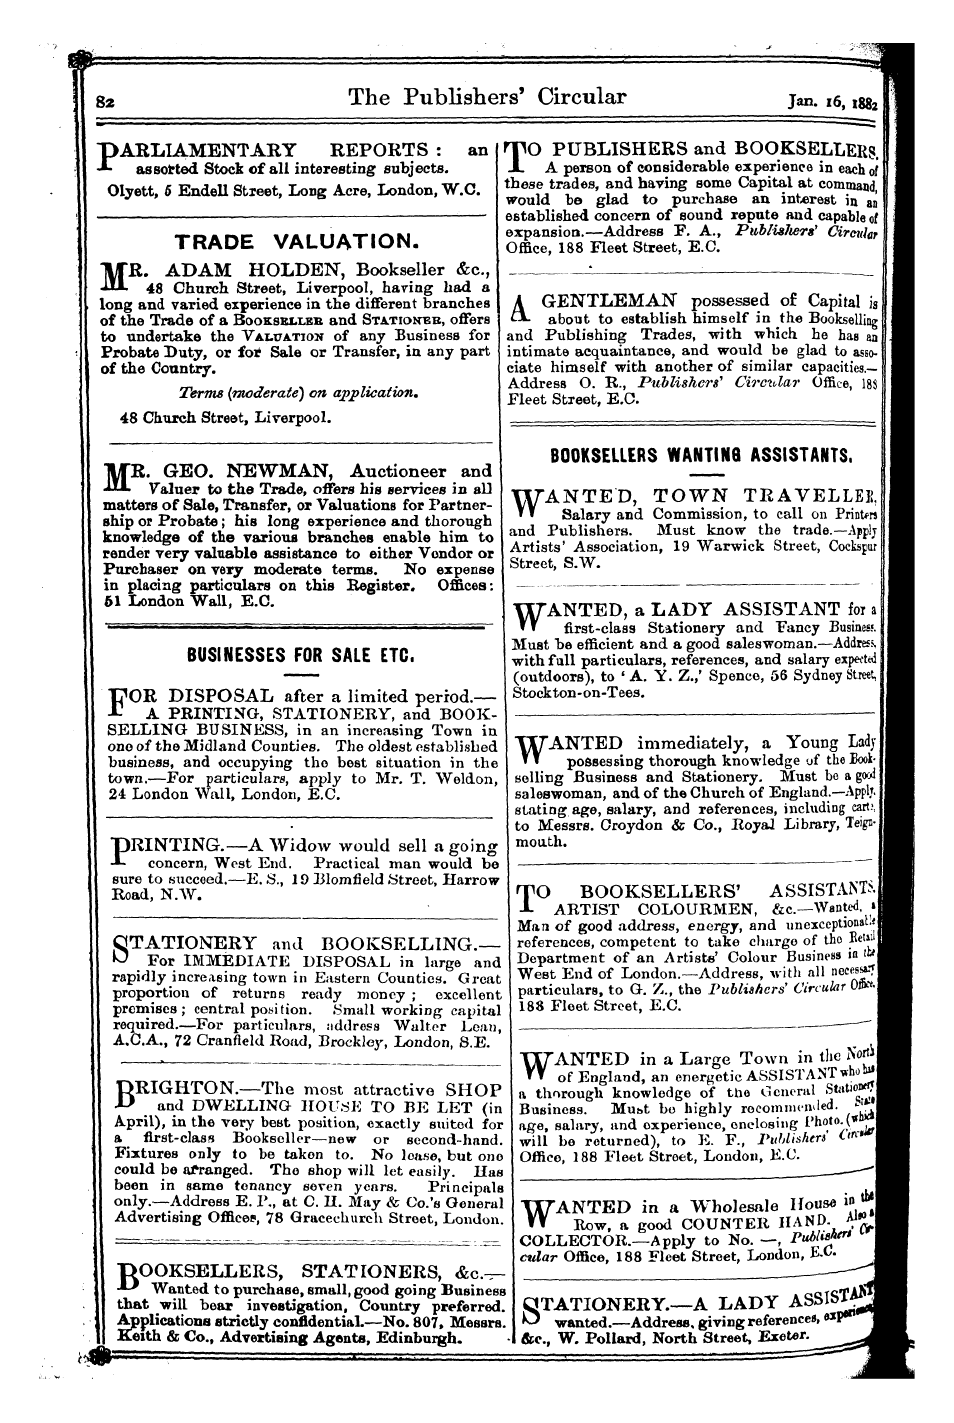 Publishers’ Circular (1880-1890): jS F Y, 1st edition: 80